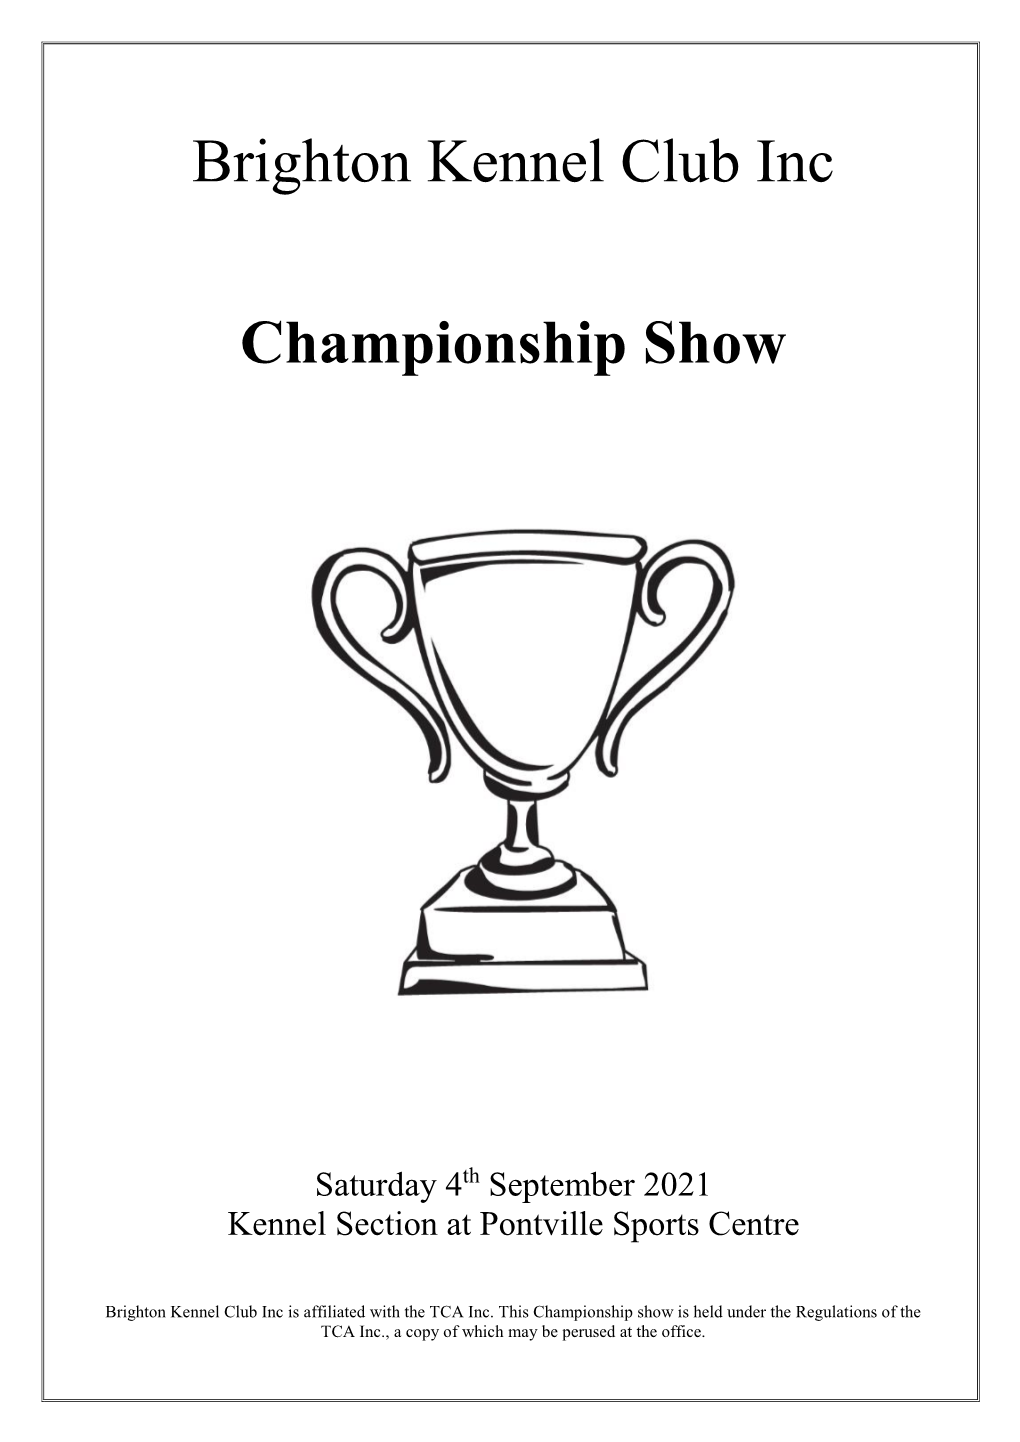 Brighton Kennel Club Inc Championship Show